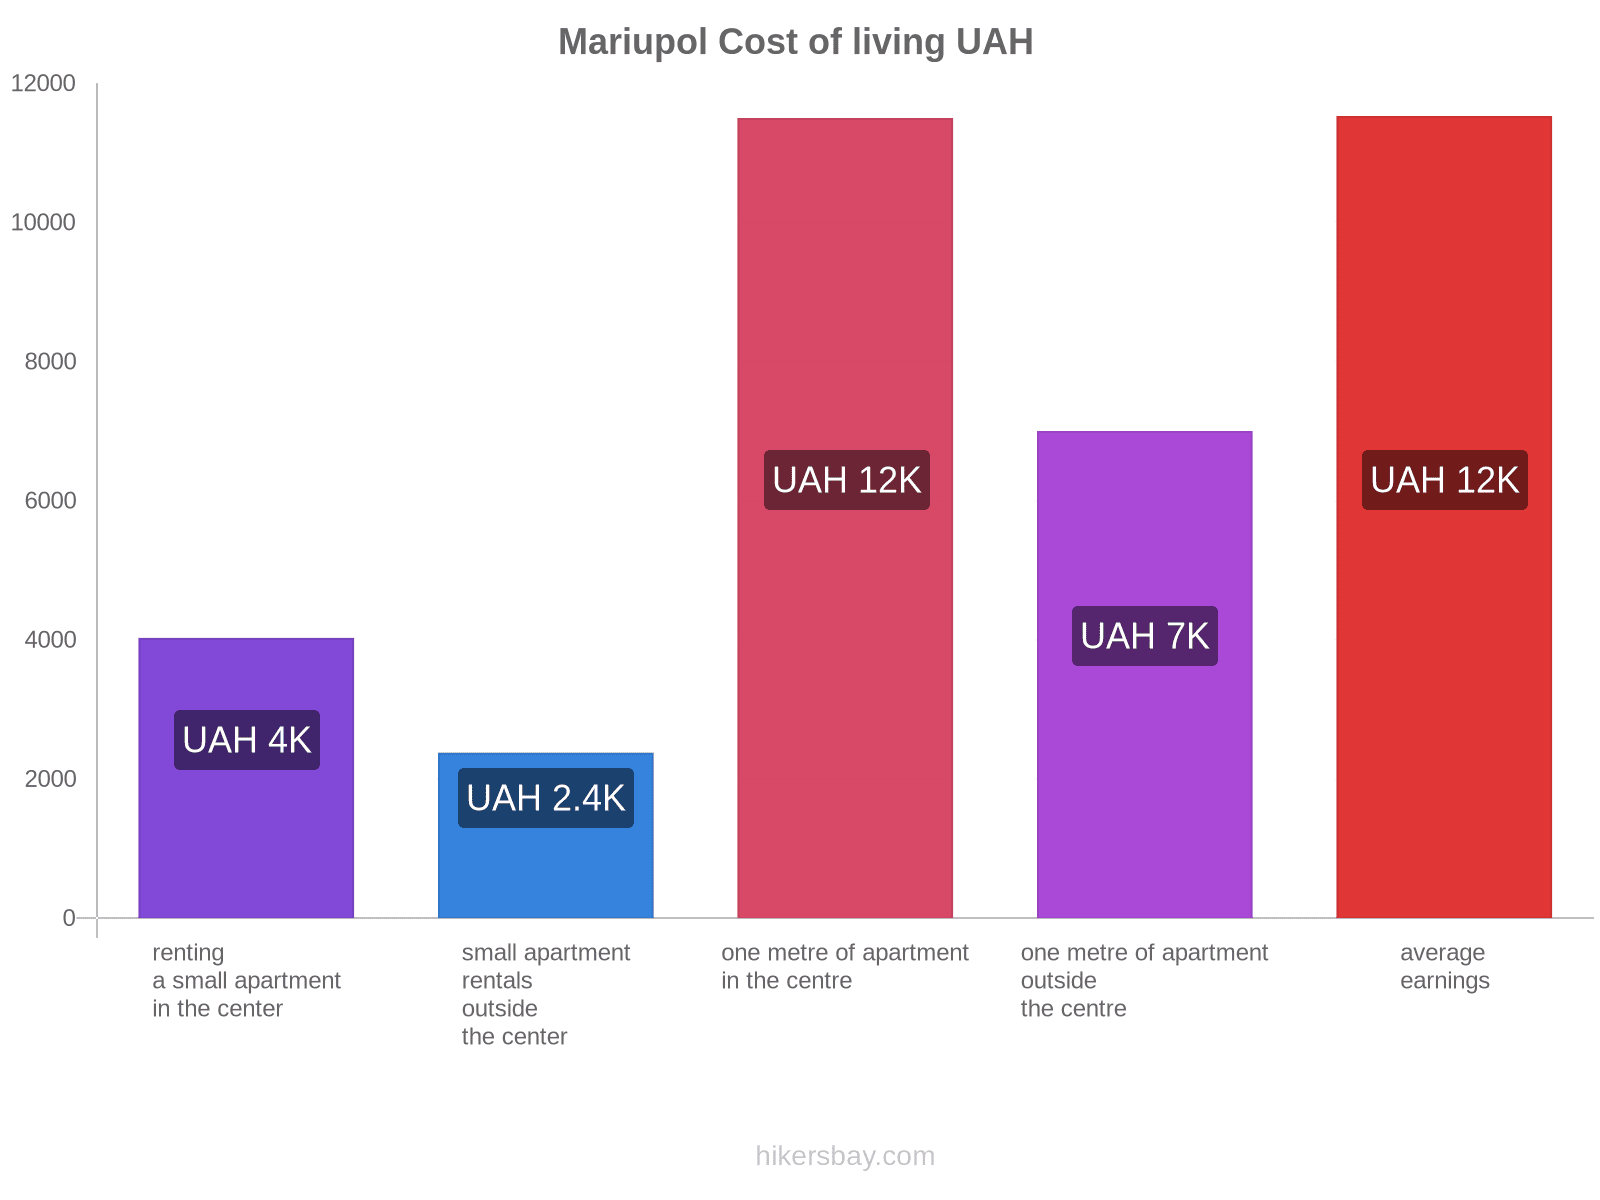 Mariupol cost of living hikersbay.com